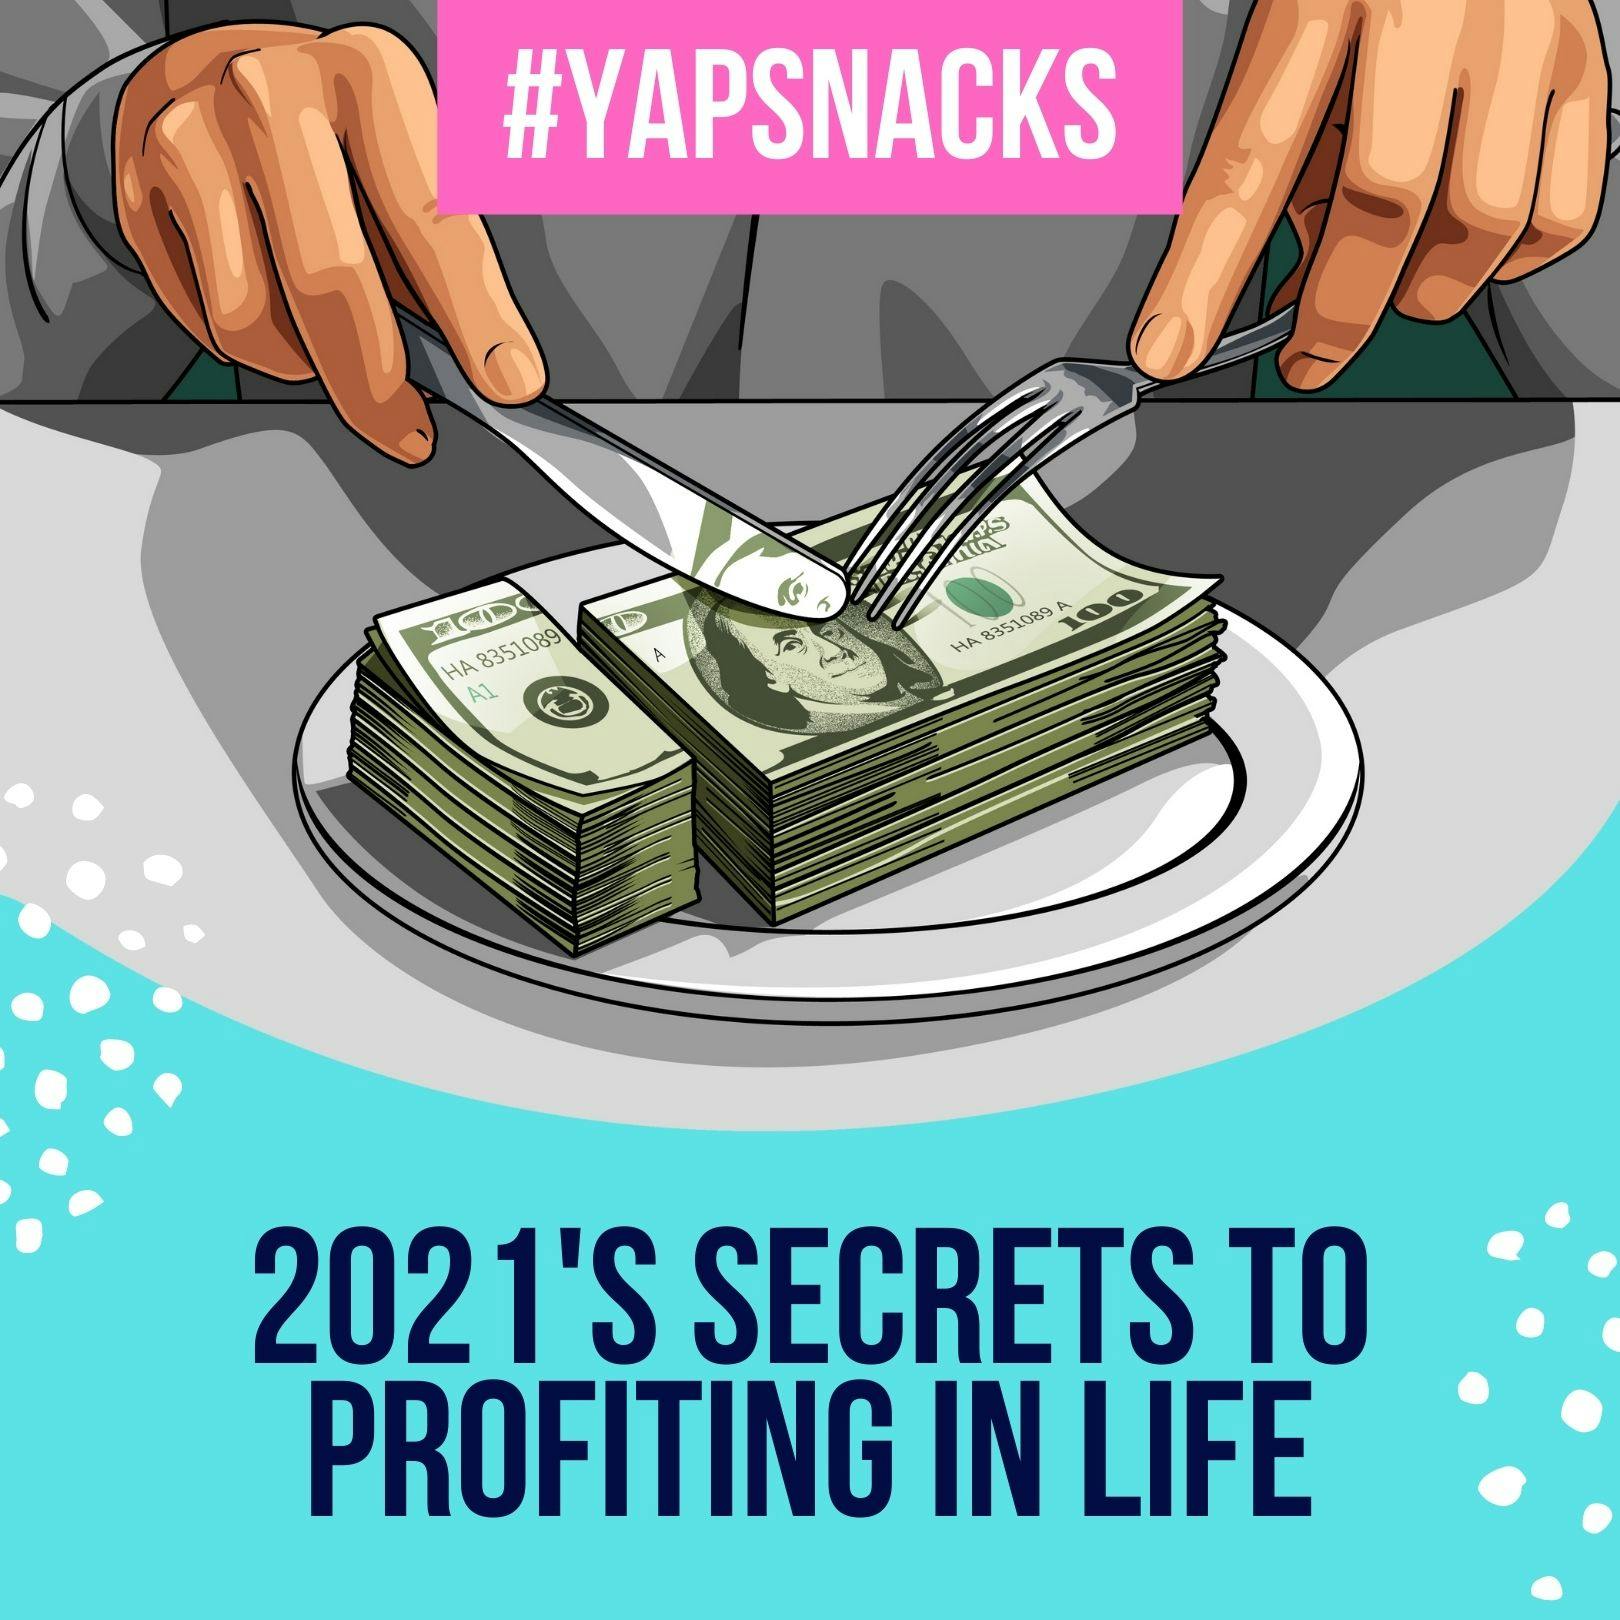 YAPSnacks: 2021's Secrets To Profiting In Life - Purpose, Priorities and Balance | Part 1 by Hala Taha | YAP Media Network